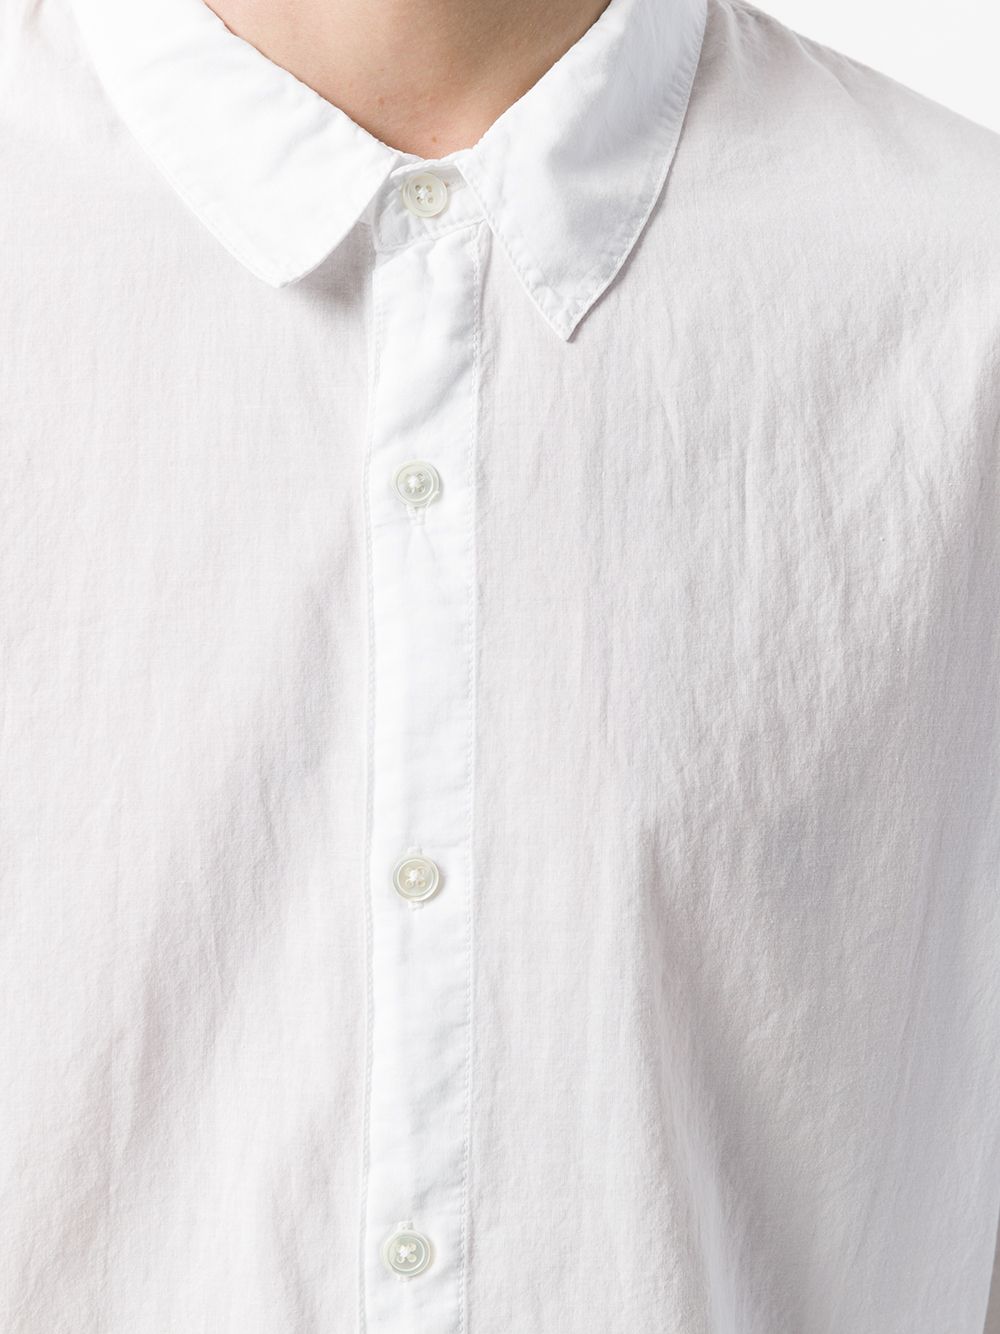 James Perse Buttoned Cotton Shirt - Farfetch